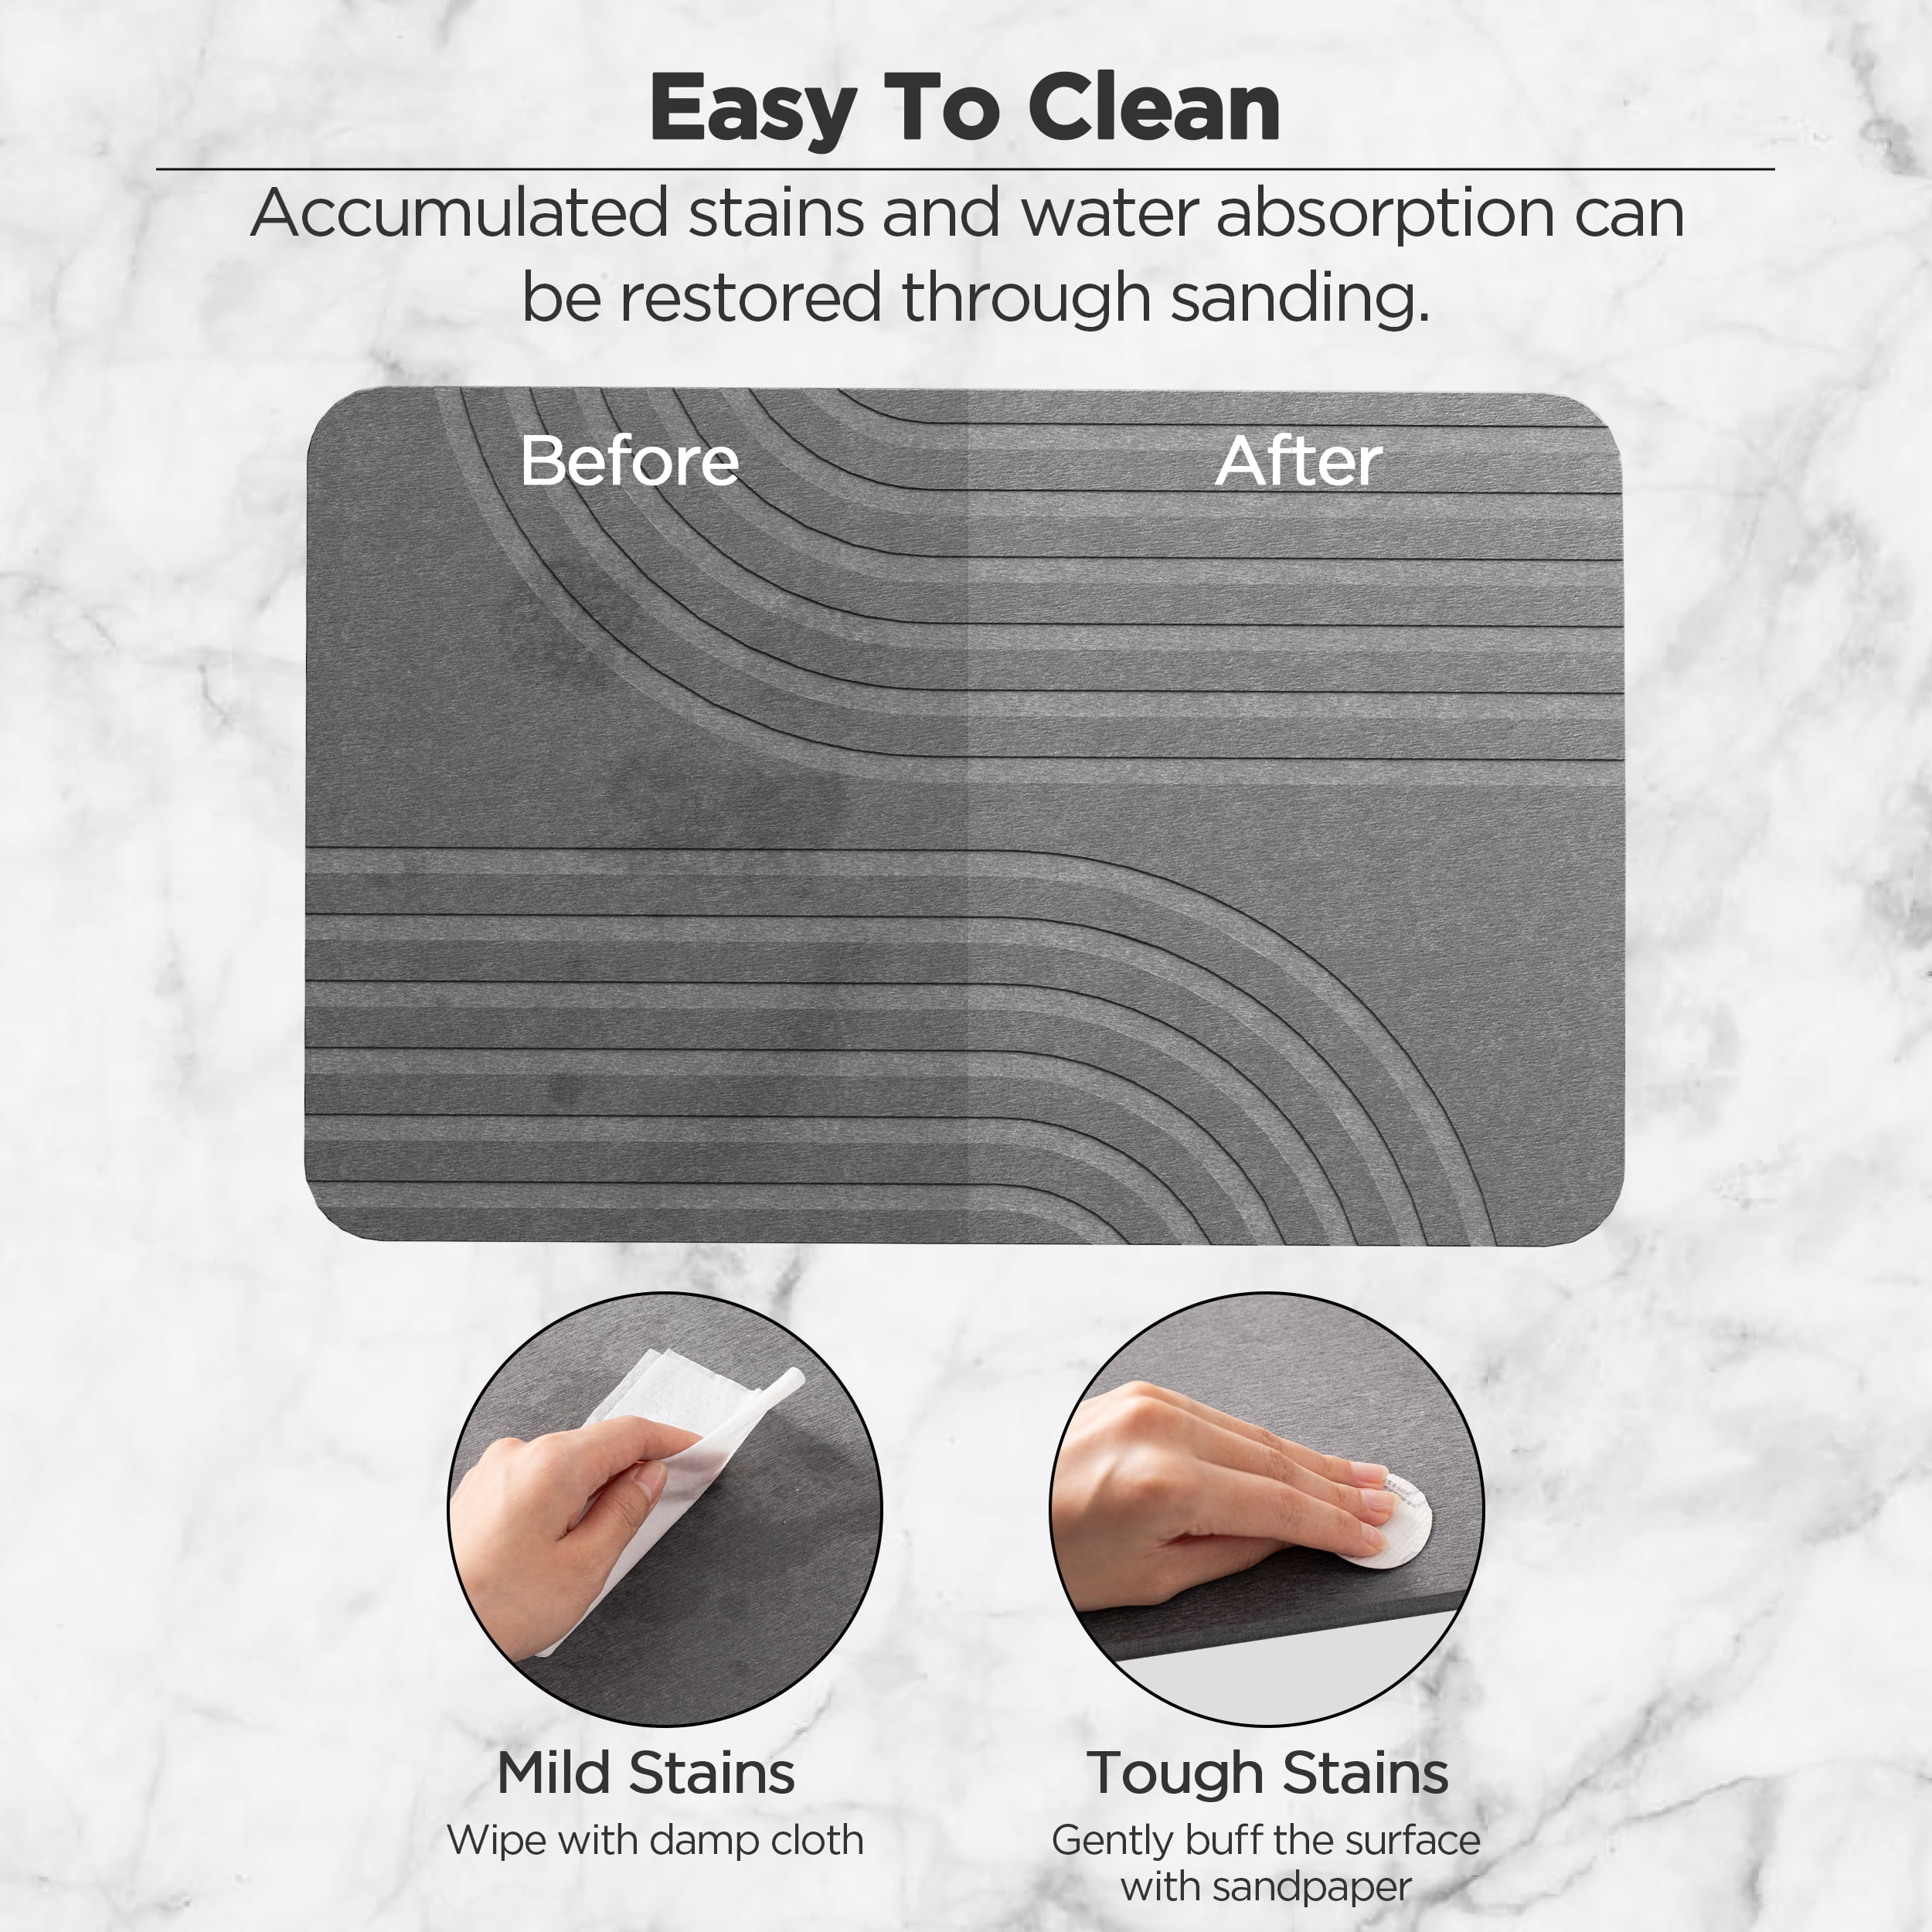 Desico Stone Diatomaceous Bath Mat Fast Drying Absorbent Non Slip Premium  Bathroom Shower Kitchen Premium (23.5 x 15)